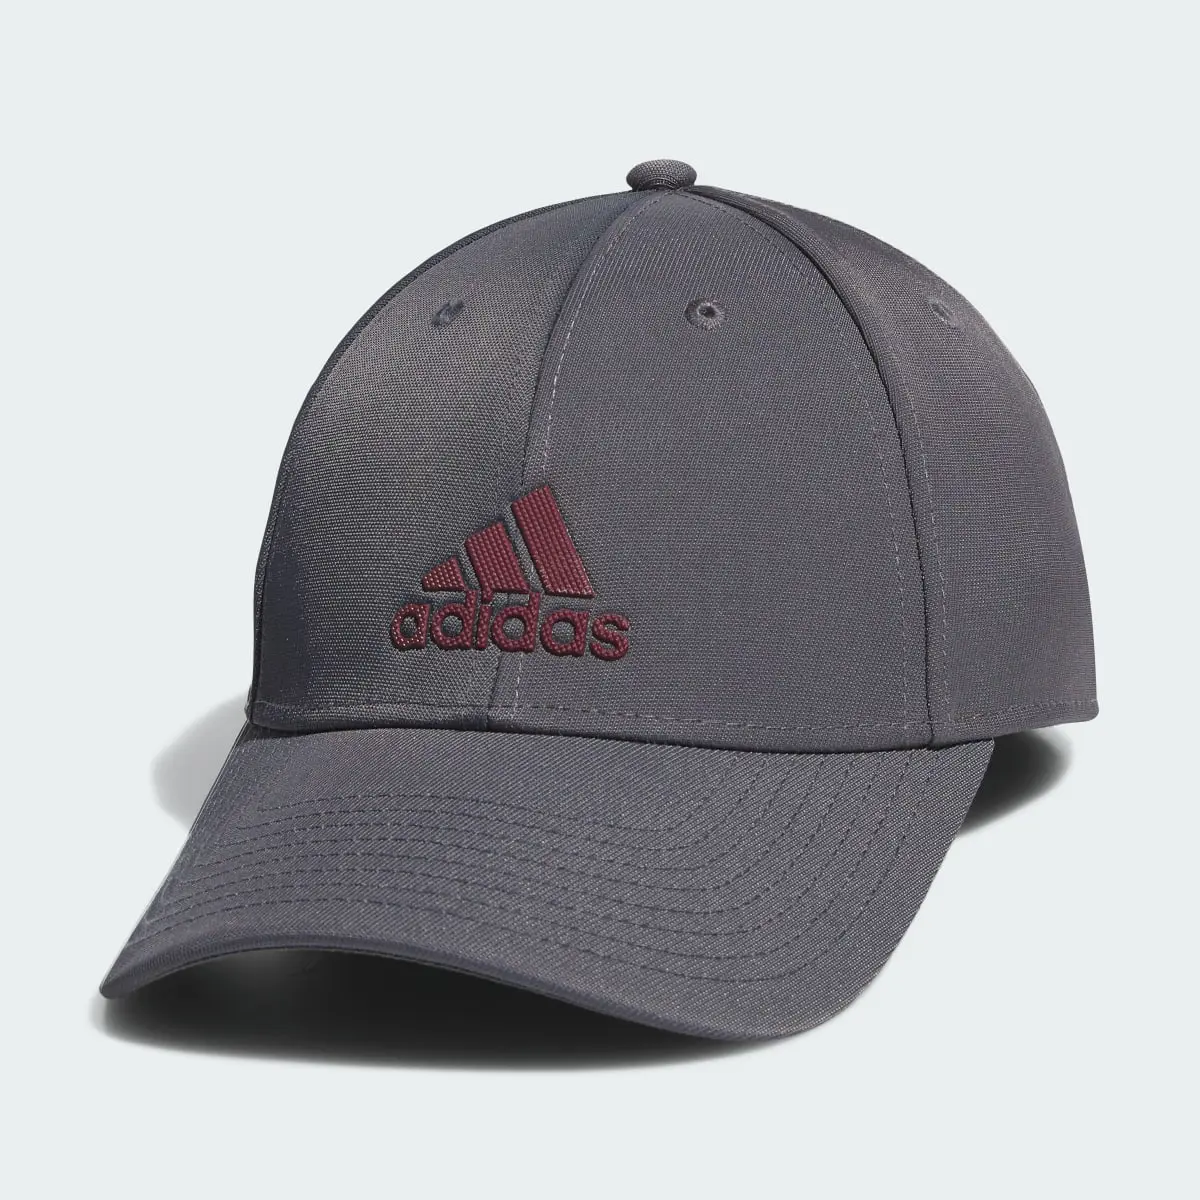 Adidas Mens Decision 3 Hat. 2